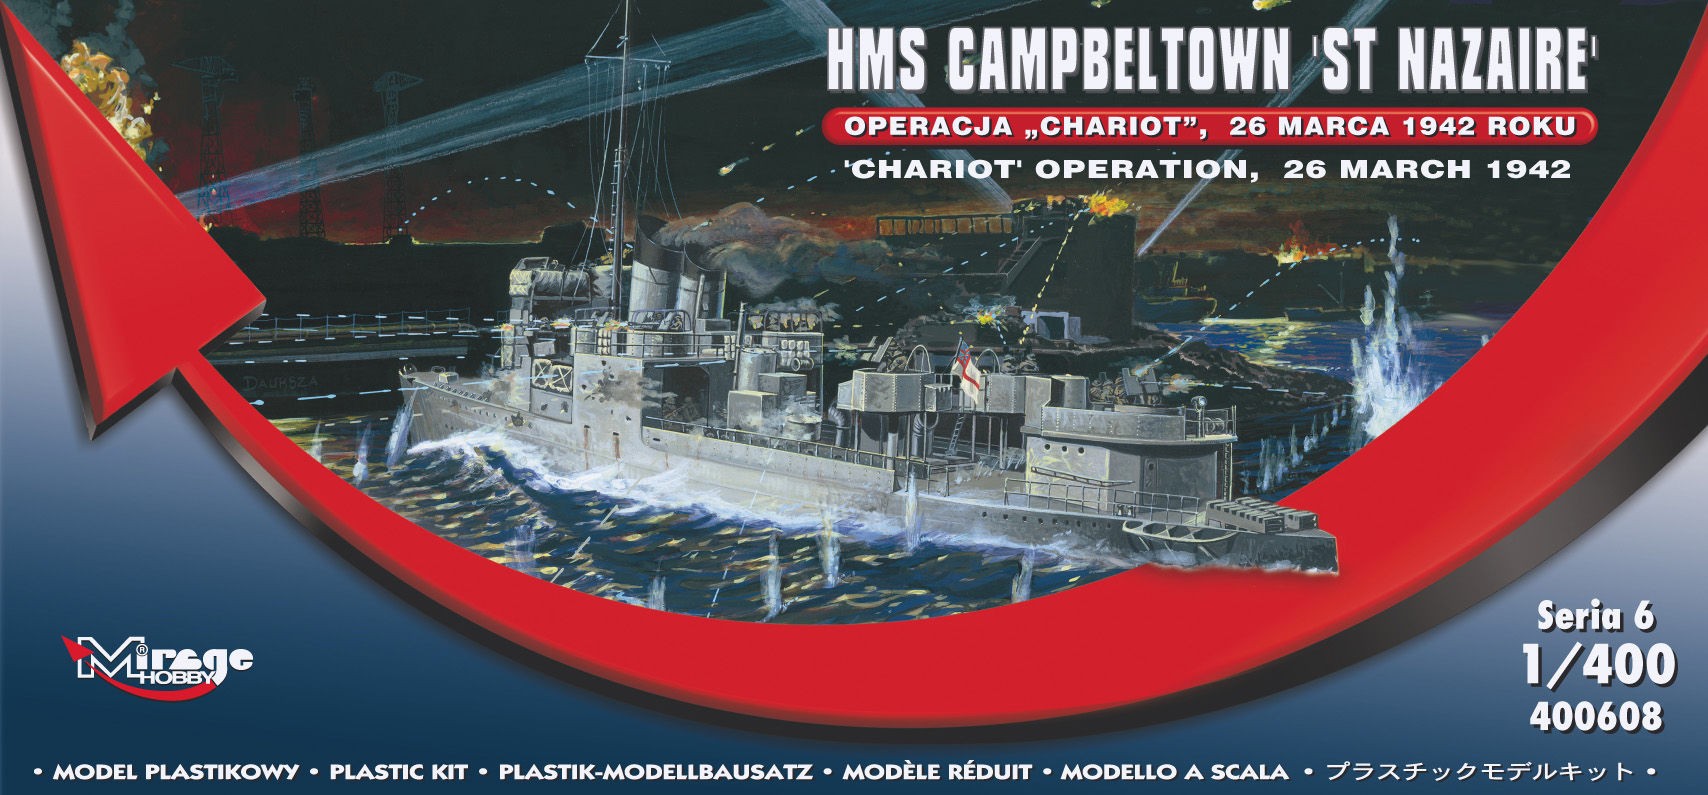 Maquette MIRAGE HOBBY Opération Chariot du HMS Campbeltown 'St Nazai